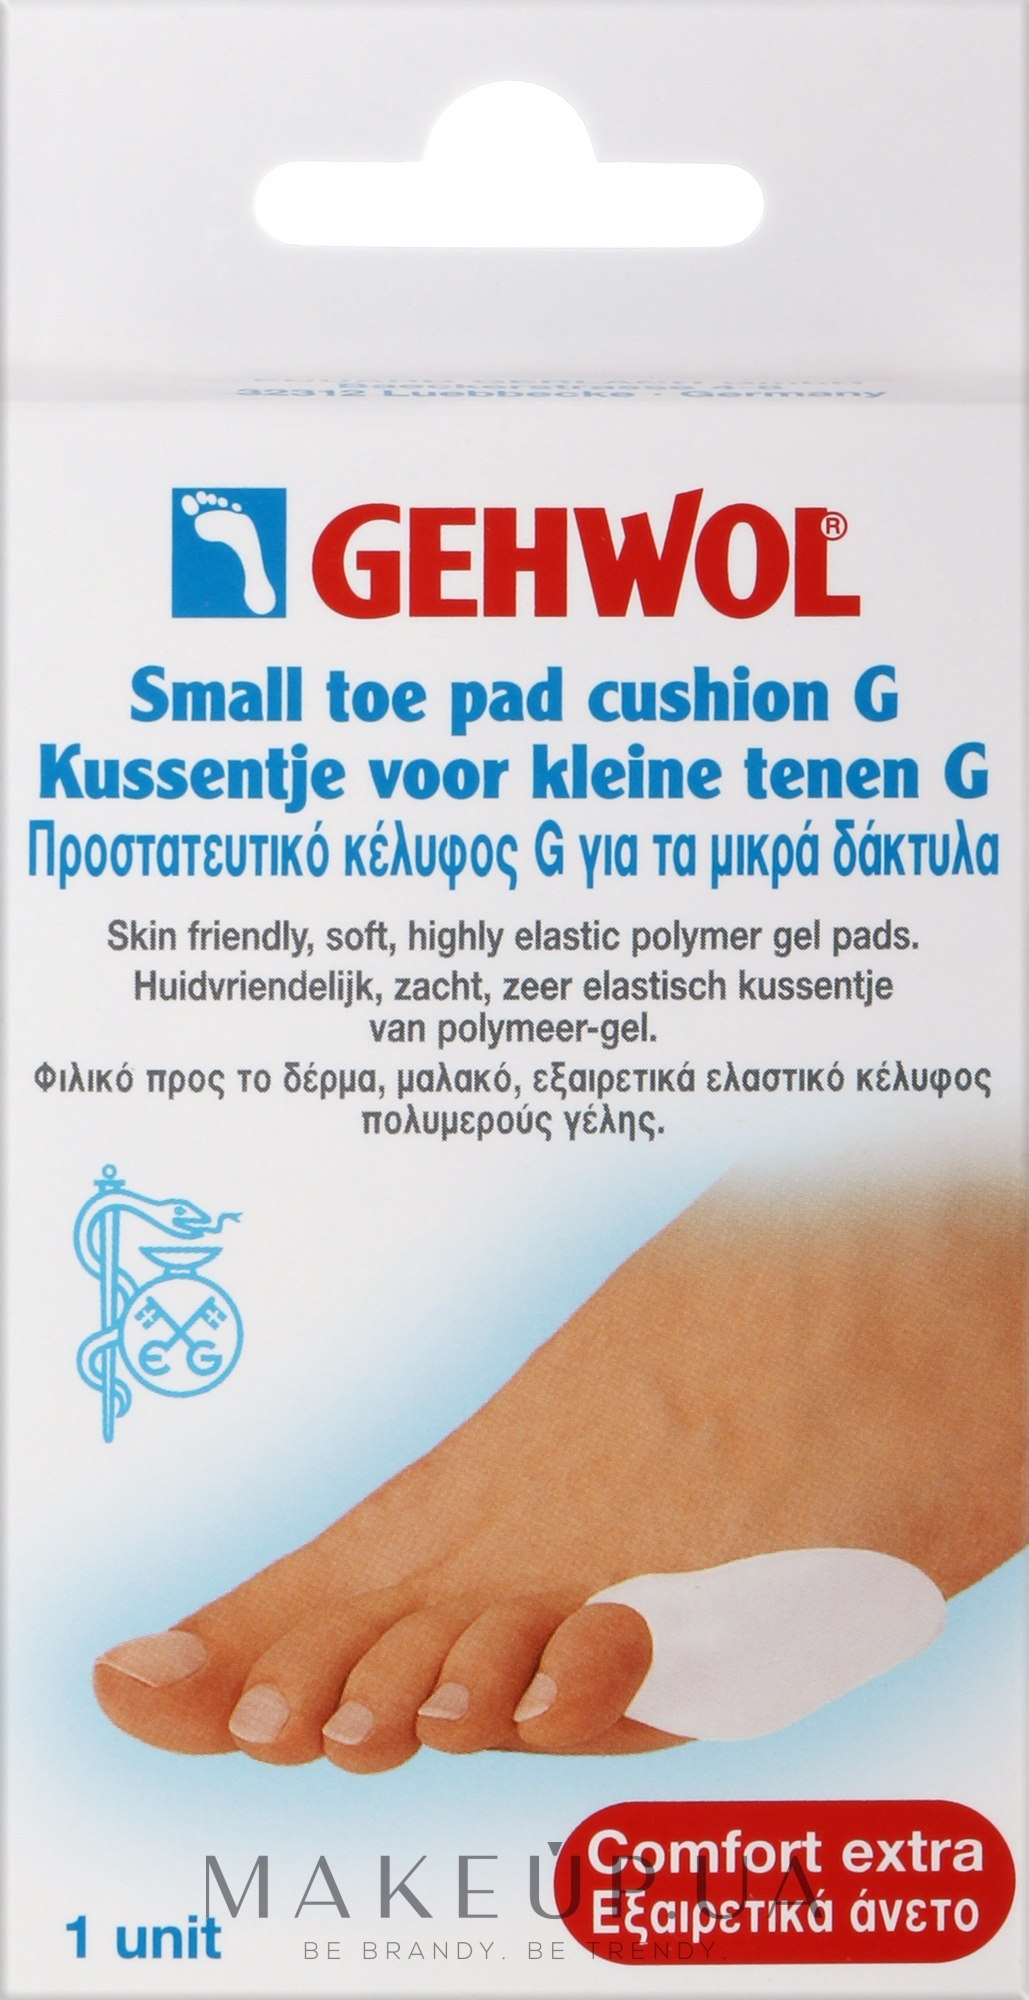 Накладка на мизинец Геволь G - Gehwol Small Toe Pad Cushion G — фото 1шт